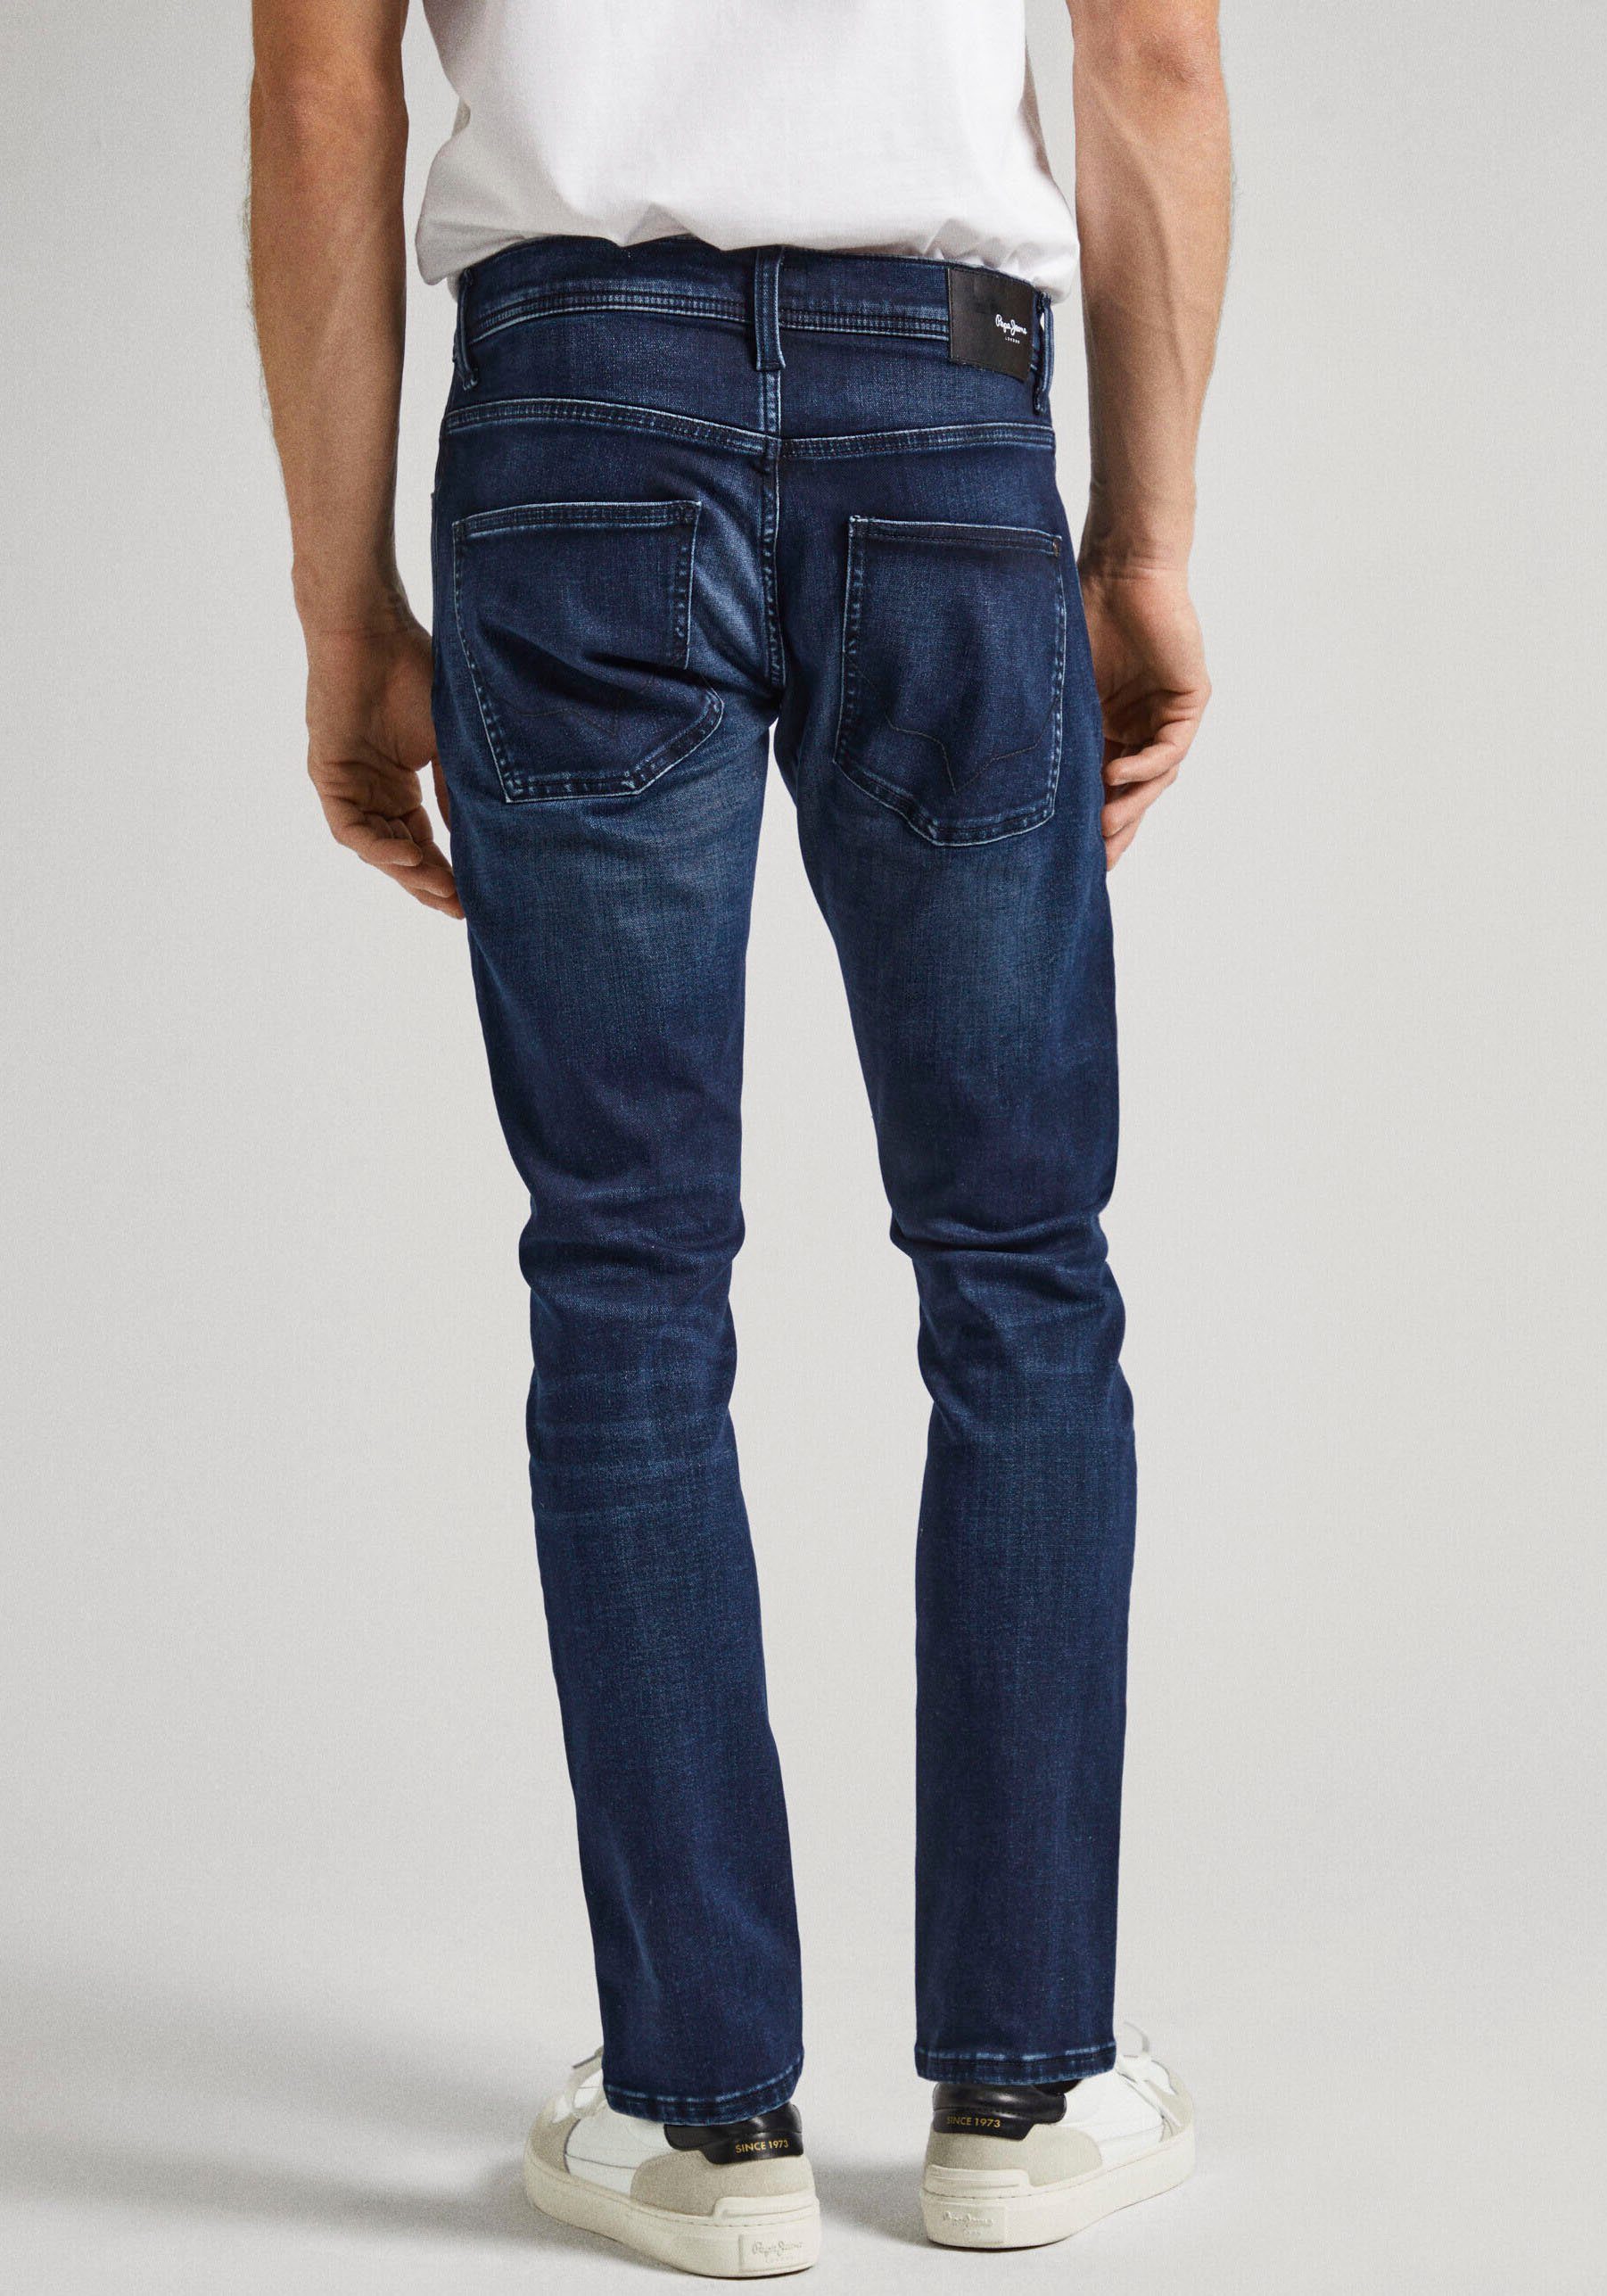 Pepe Jeans 5-pocket jeans